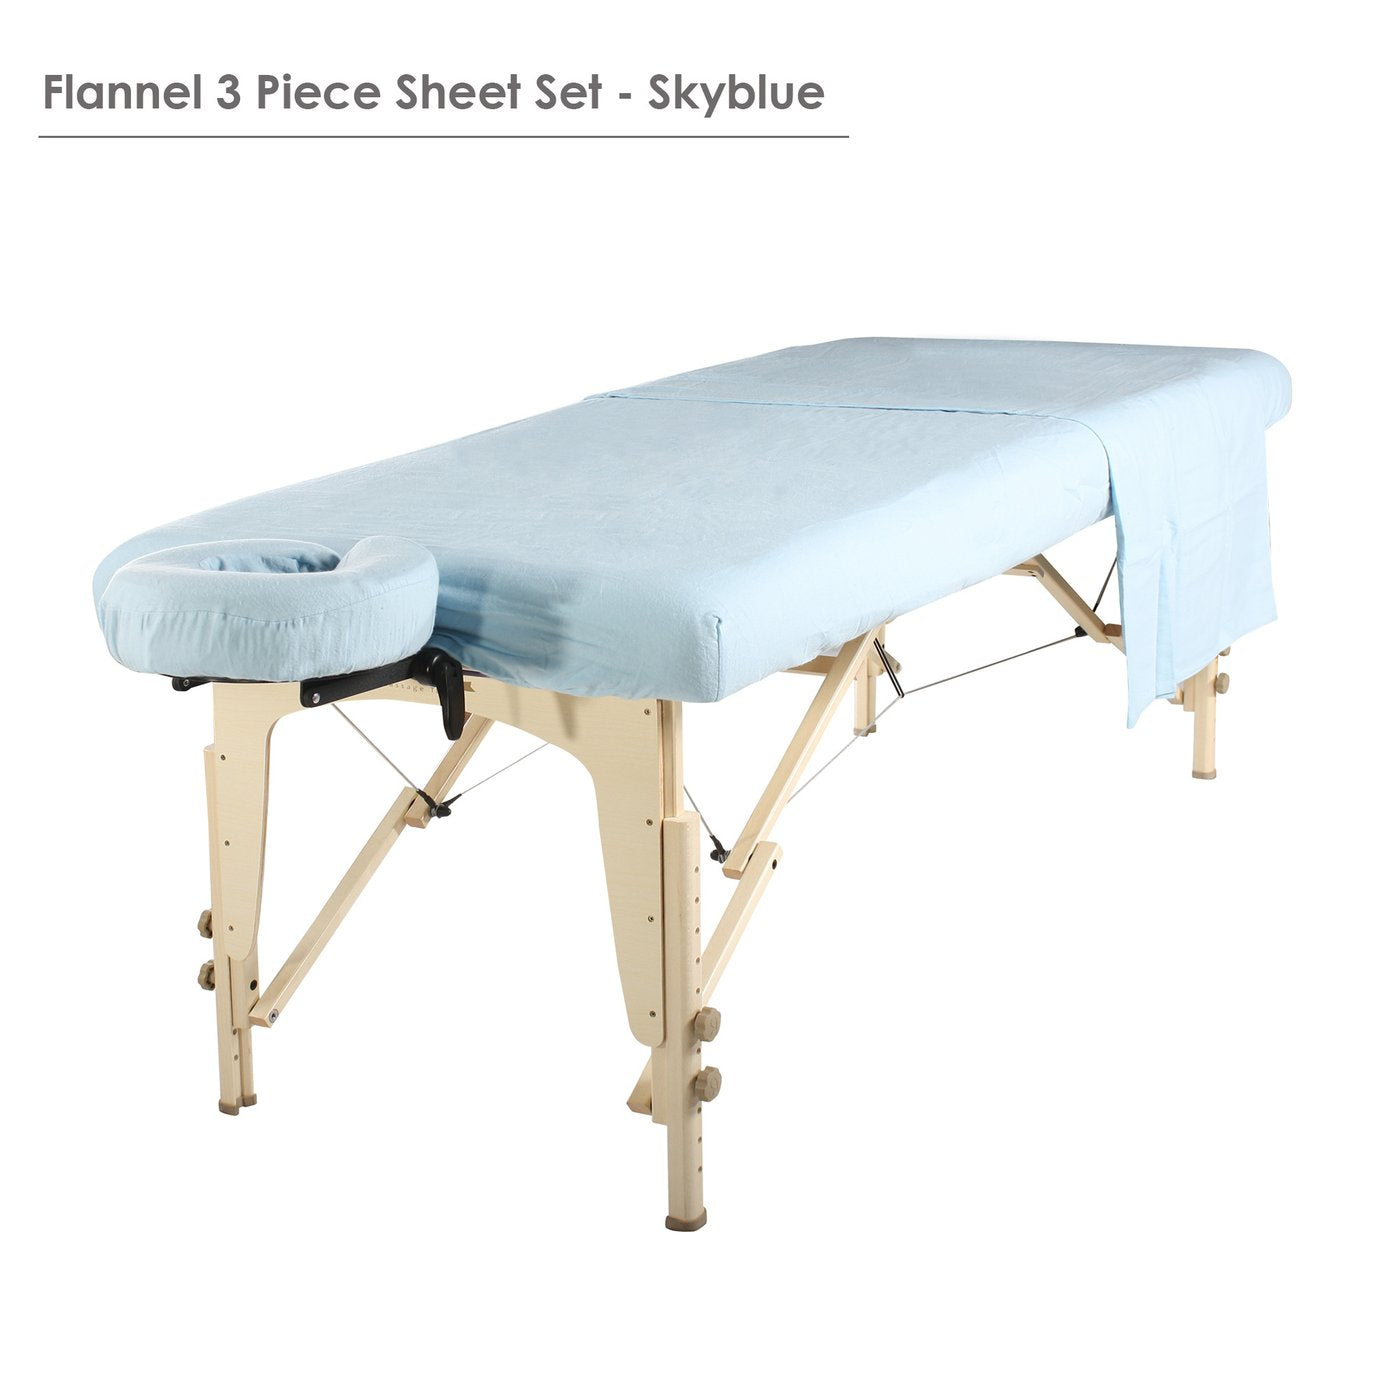 Spabodega Deluxe Massage Table Flannel 3 Piece Sheet Set - 100% Cotton-Pure White